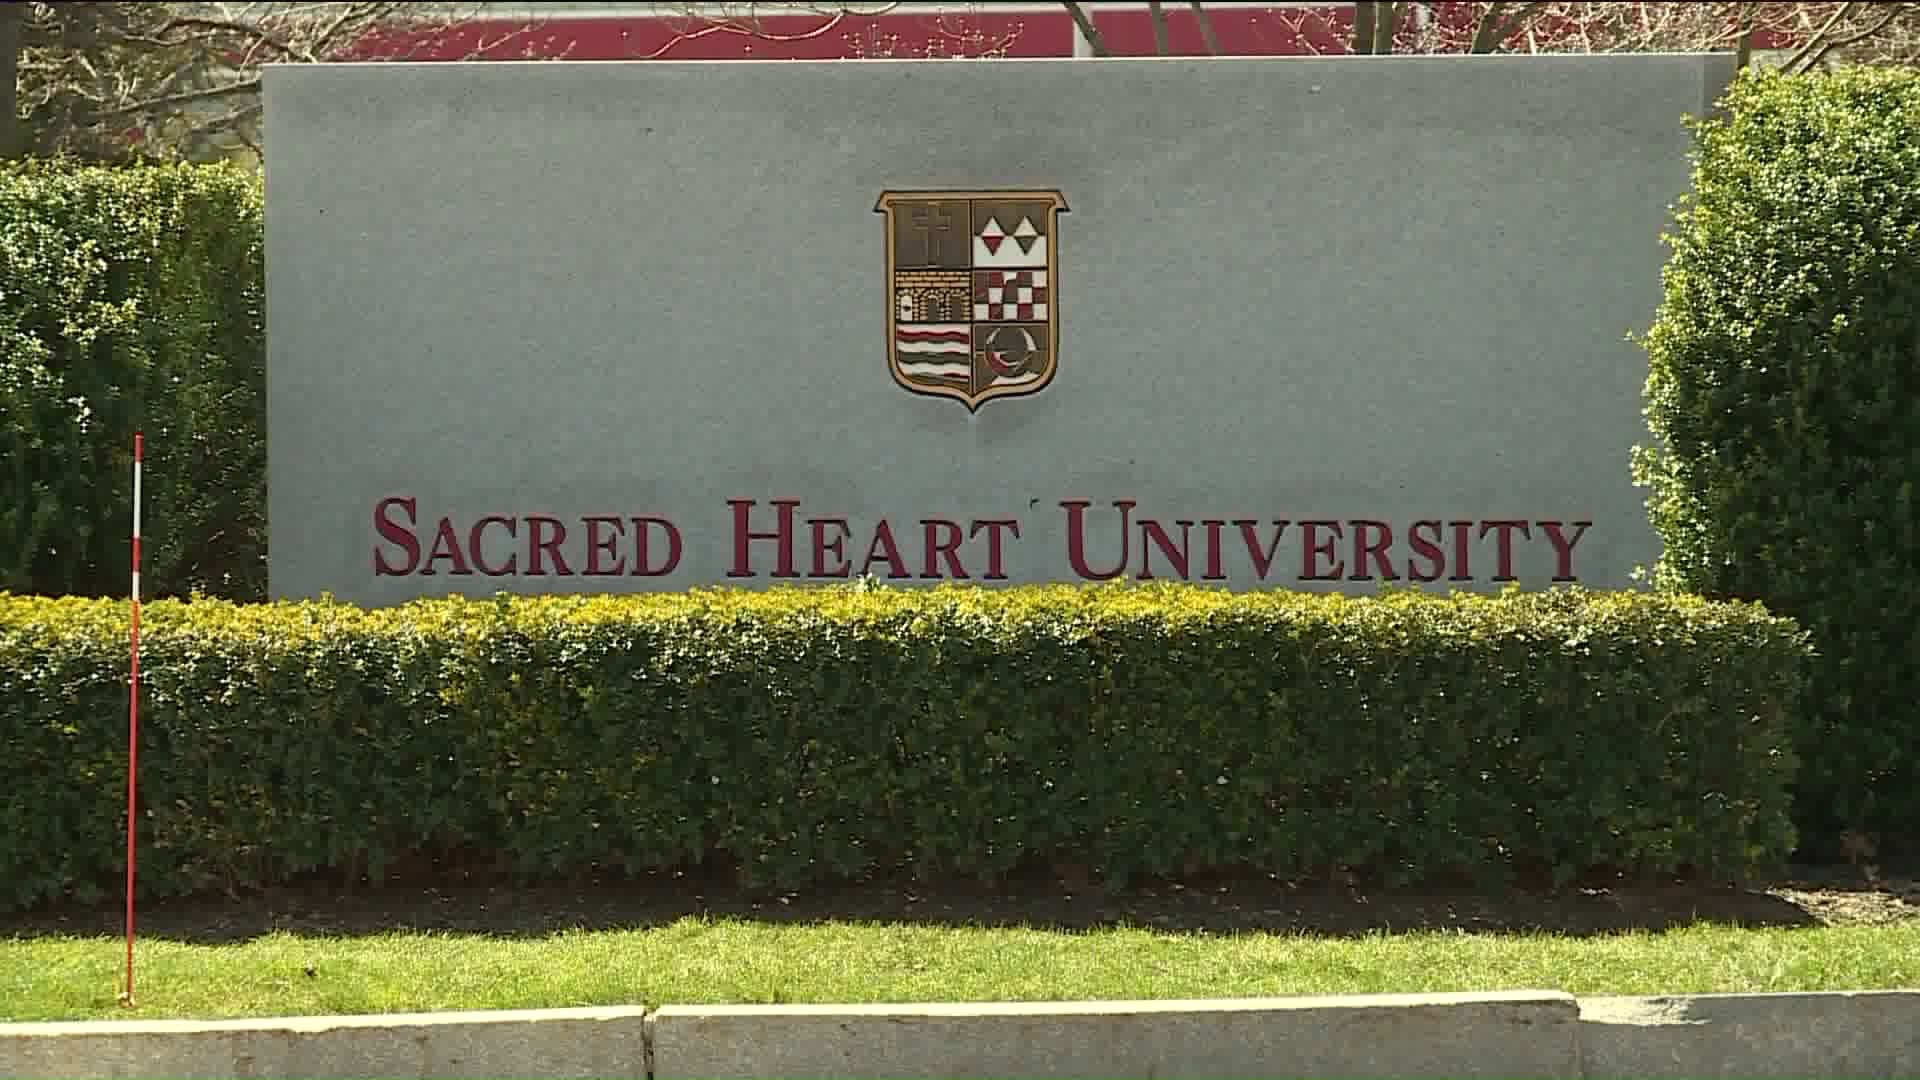 Parents concerned over video incident at Sacred Heart